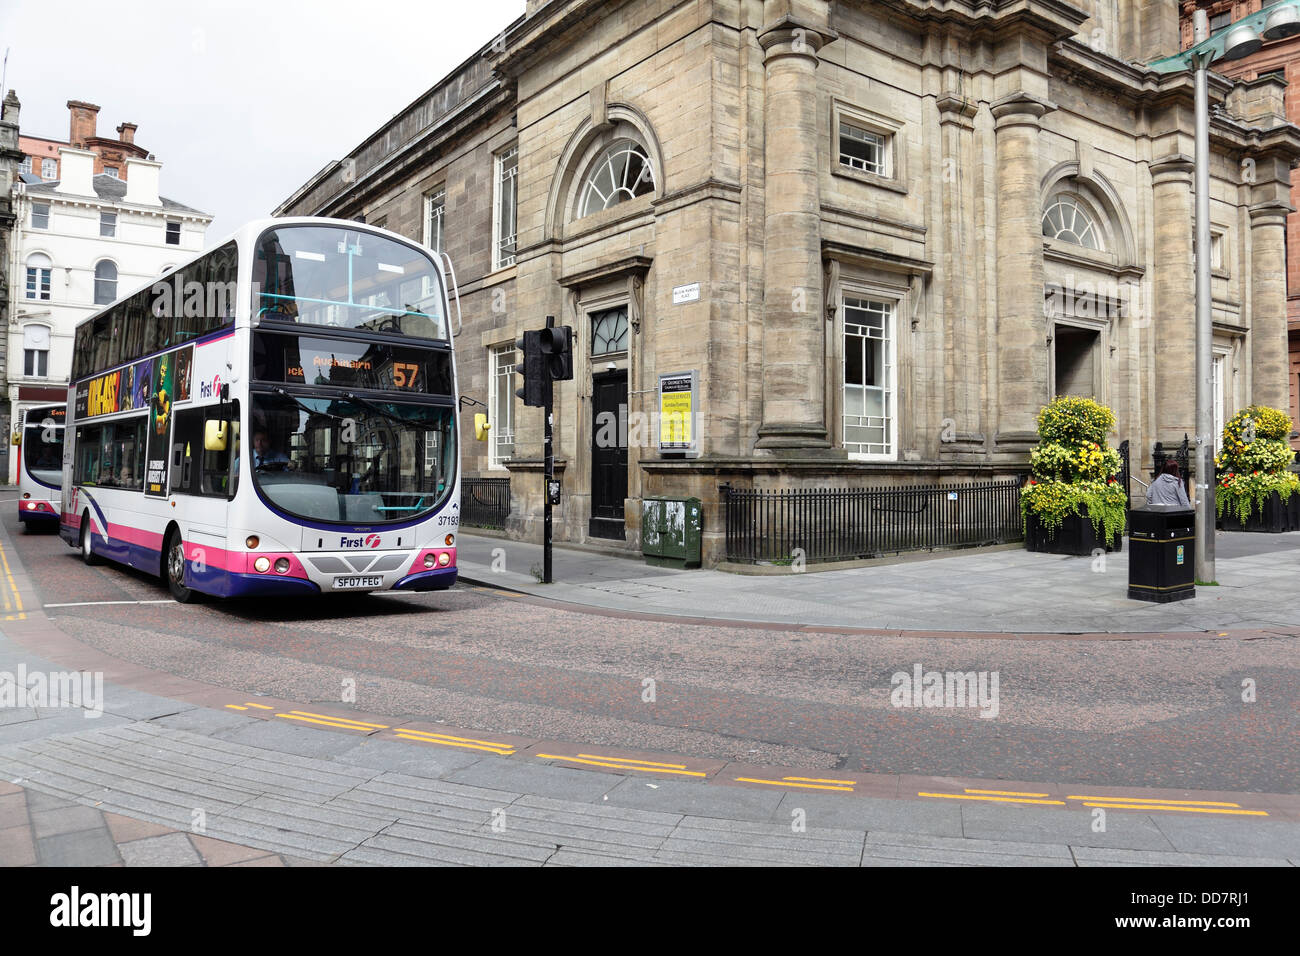 A bus on Nelson Mandela Place in Glasgow city centre, Scotland, UK Stock Photo